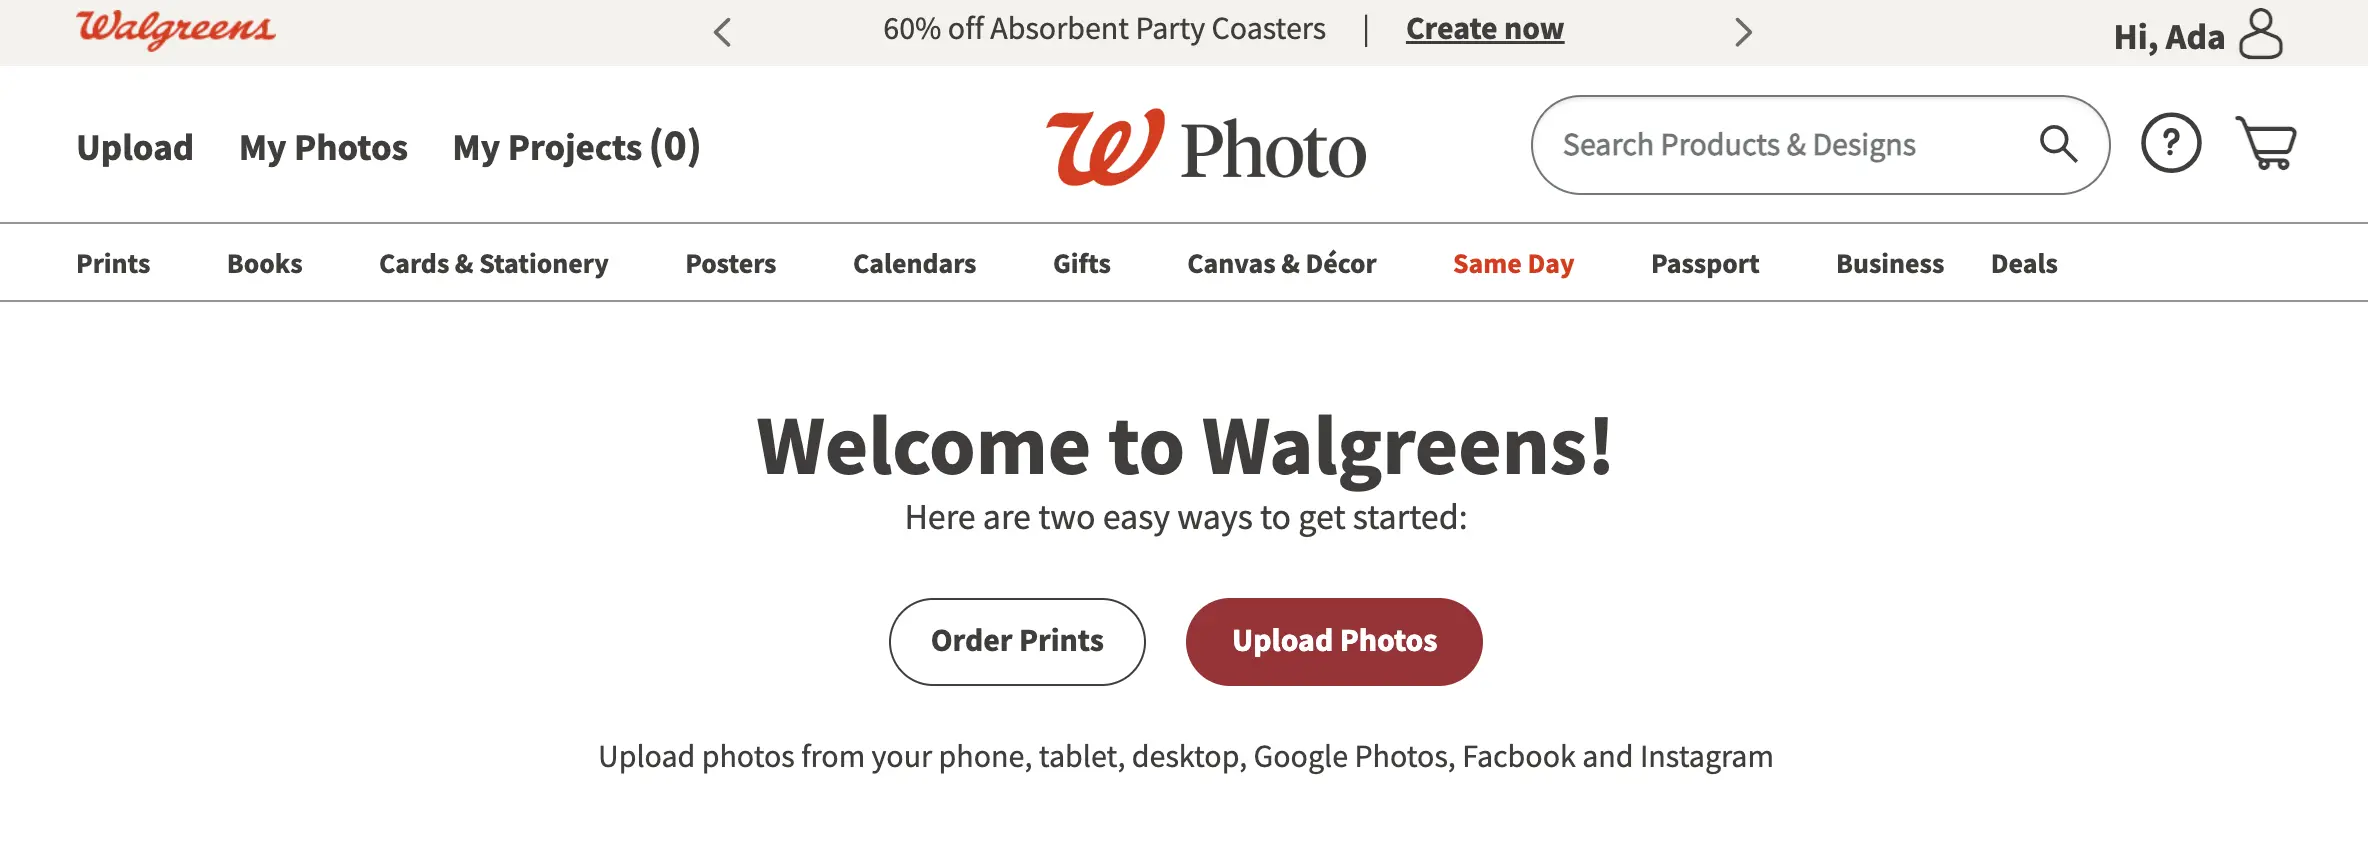 walgreens photo home page